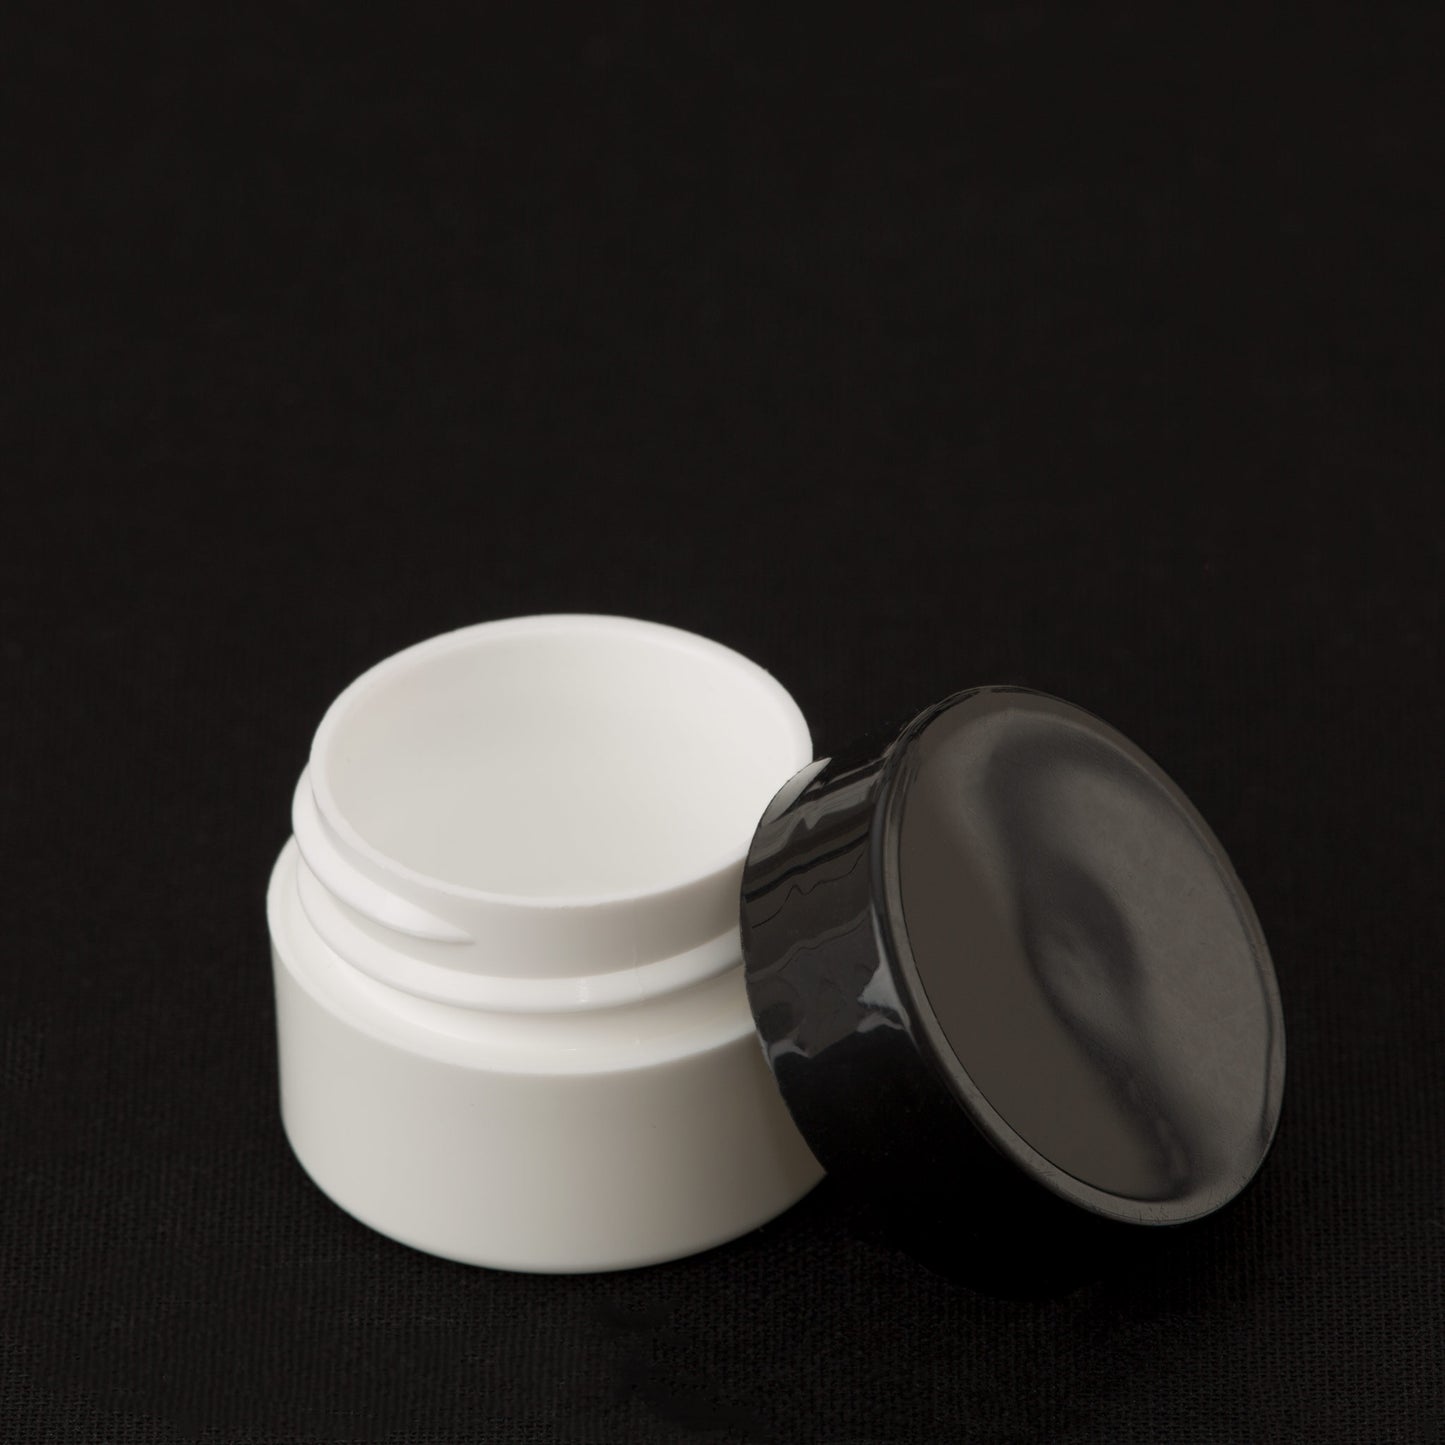 .25 oz / 7.5ml White Lip Balm Jar with Black Cap